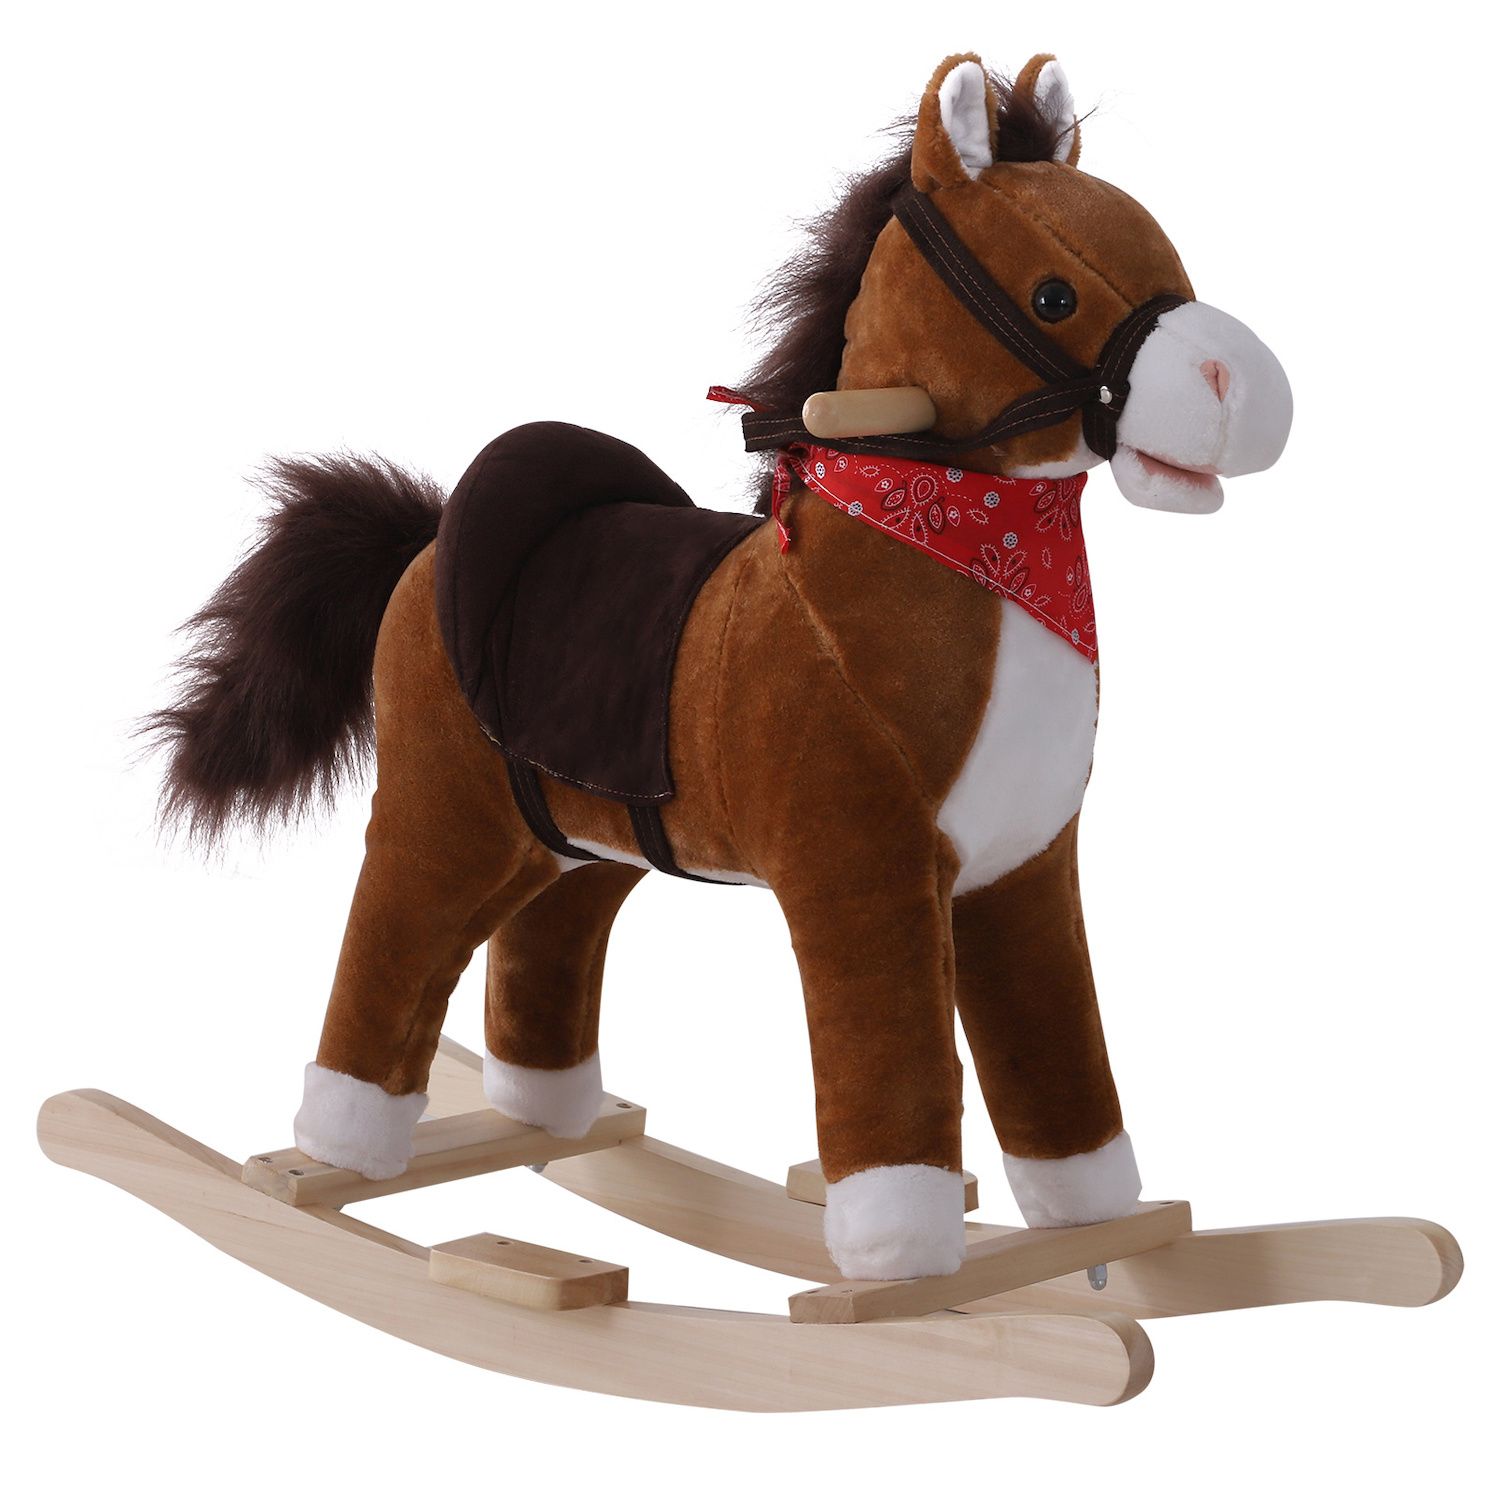 Qaba Kids Ride-on Rocking Horse Toy Llama Style Rocker Soft Plush